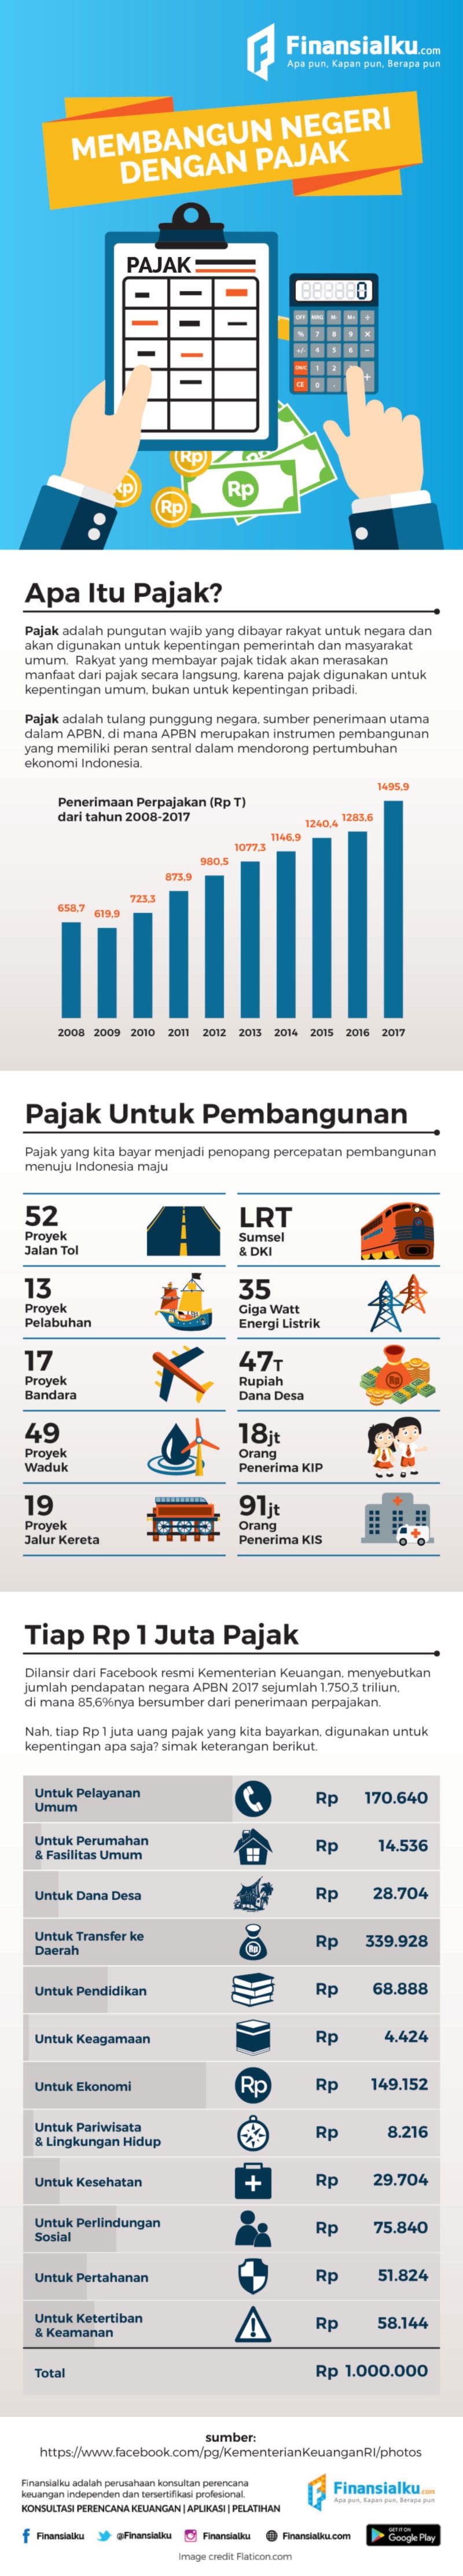 Infografis Membangun Negeri Indonesia dengan Pajak 02 - Finansialku